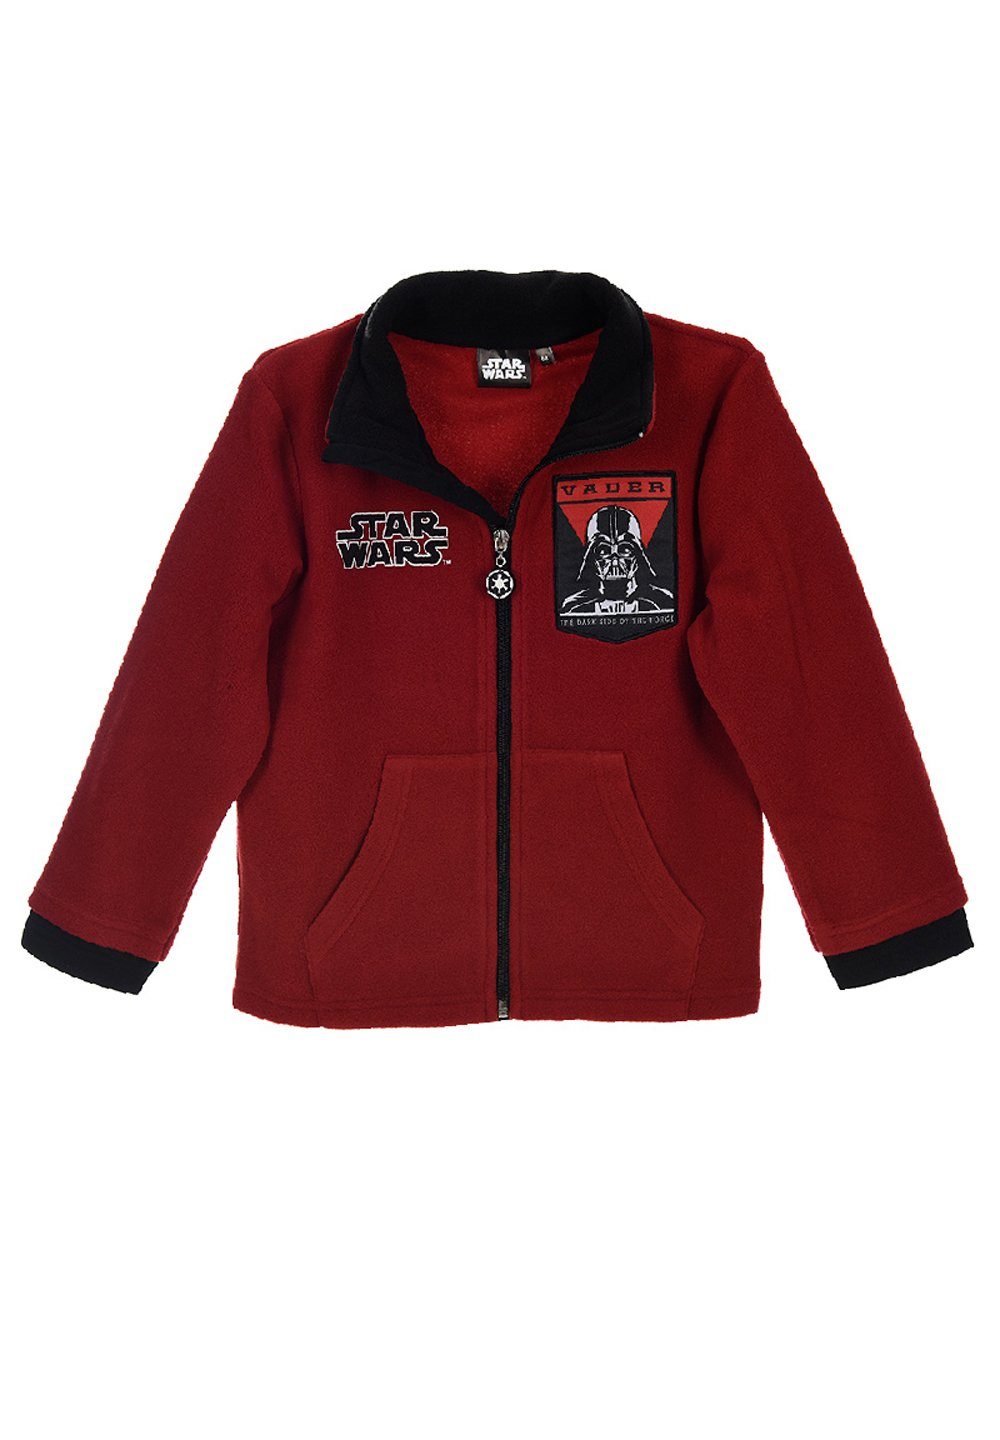 Star Wars Fleecejacke »Darth Vader Stormtrooper Fleecejacke Sweatjacke Kinder  Jungen« online kaufen | OTTO